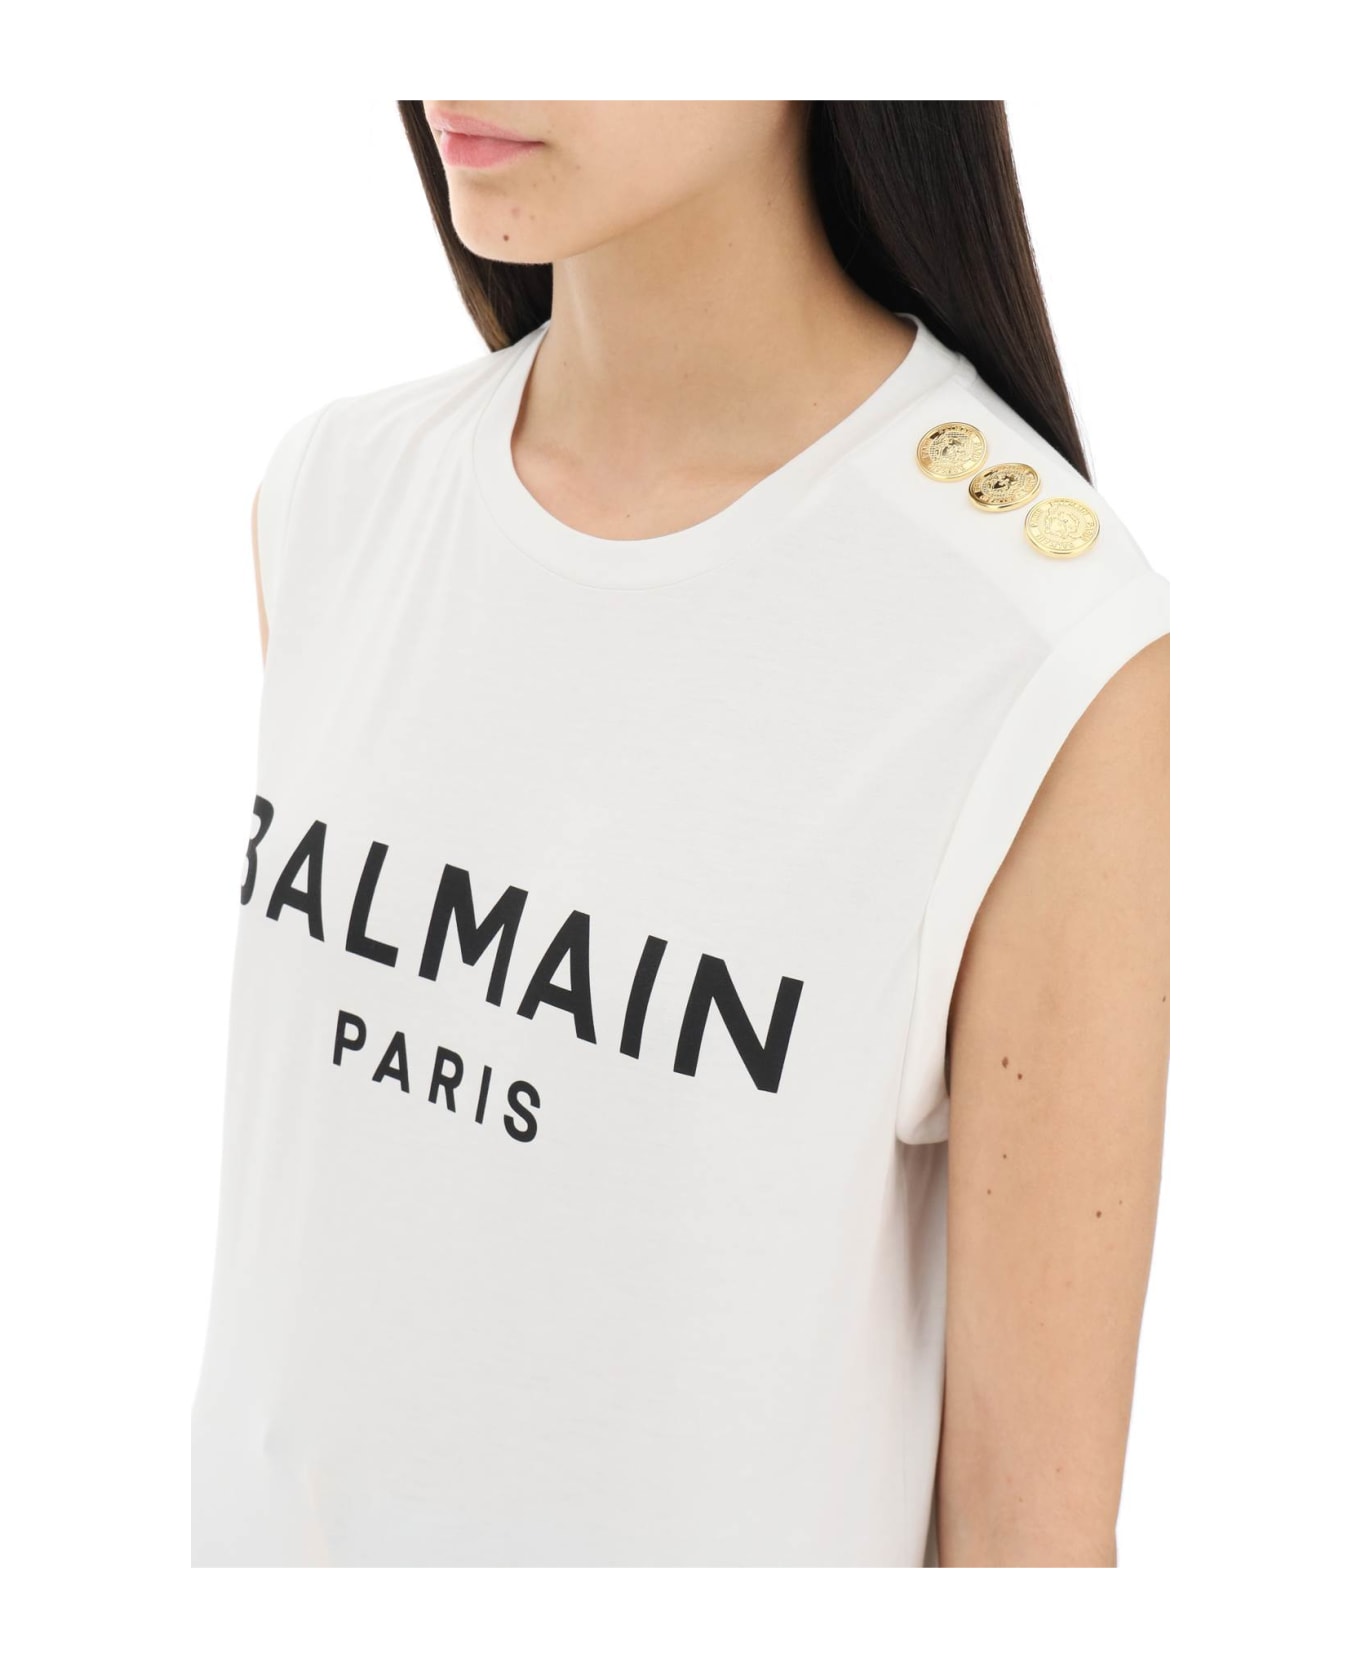 Balmain Logo Print T-shirt - White タンクトップ